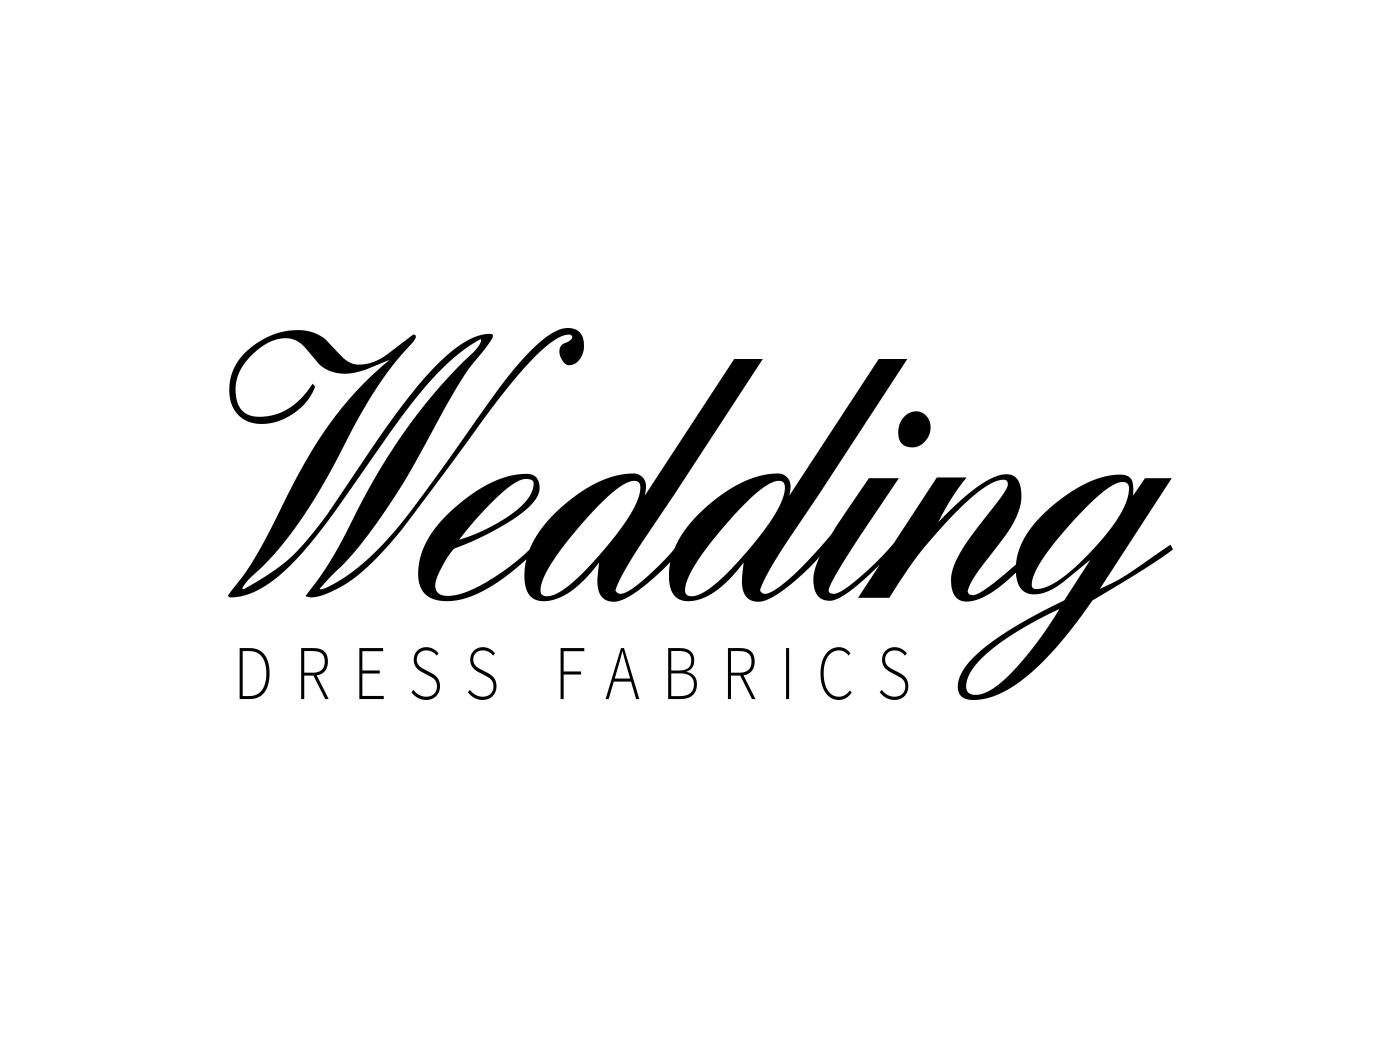 Web Development - Welcome to Wedding Dress Fabrics